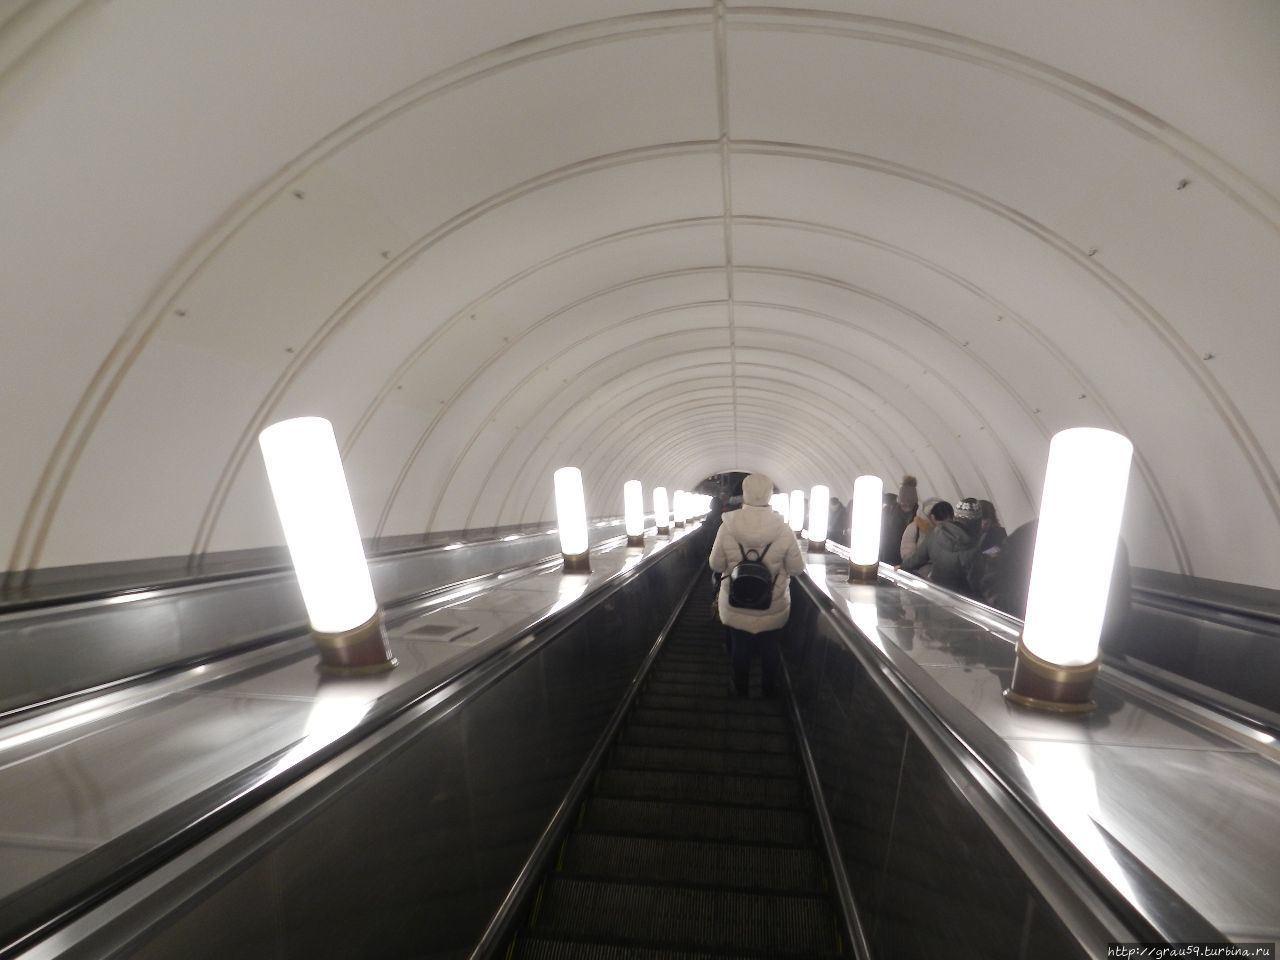 Сидней кольцевое метро